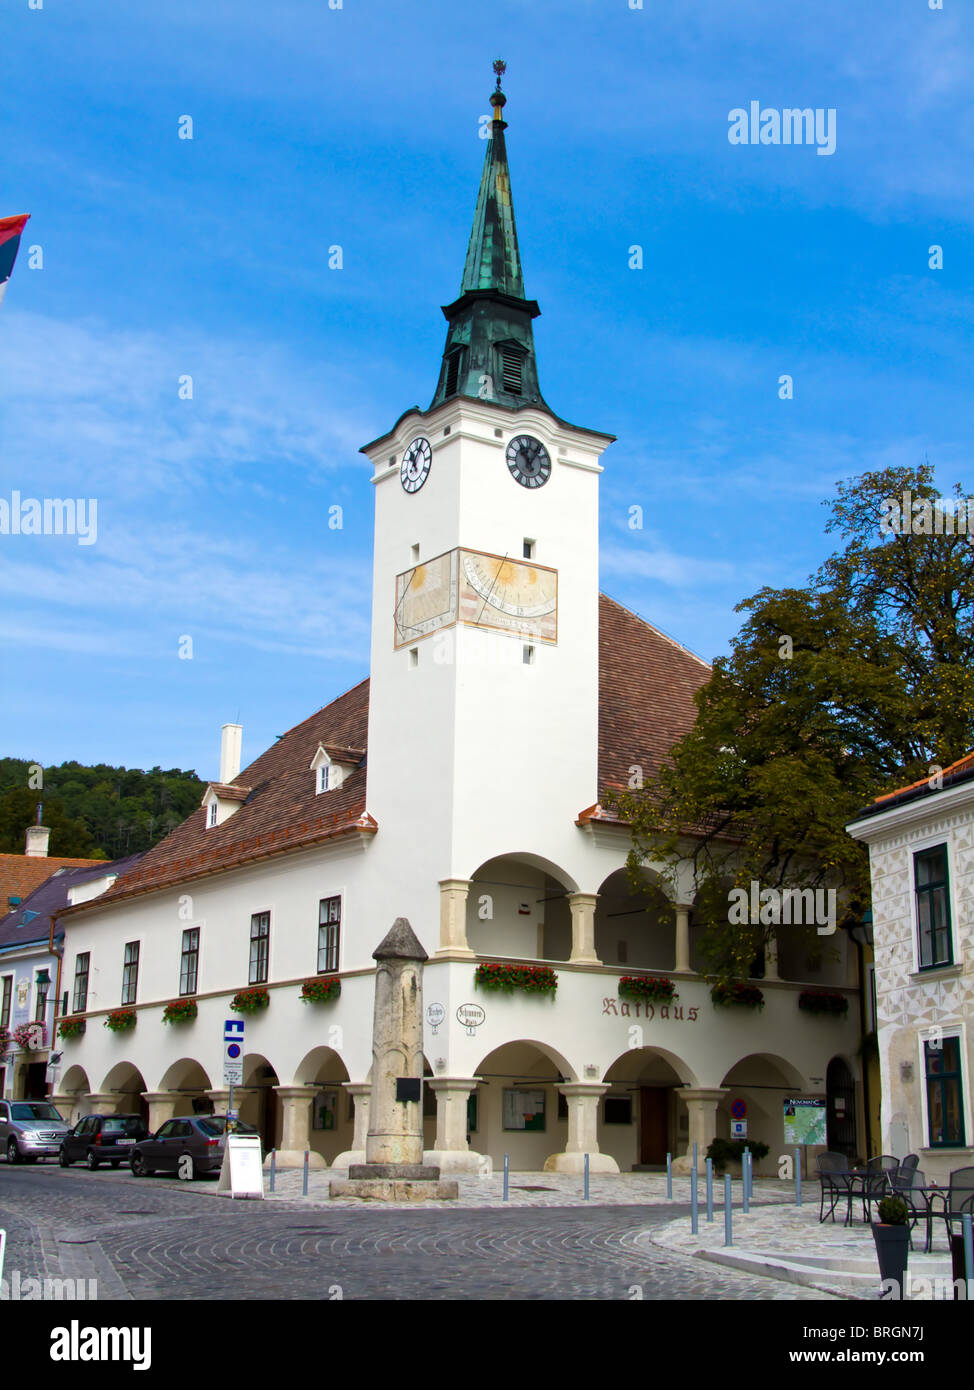 Austria, Lower Austria, Gumpoldskirchen, Cityscape with Church Stock Photo